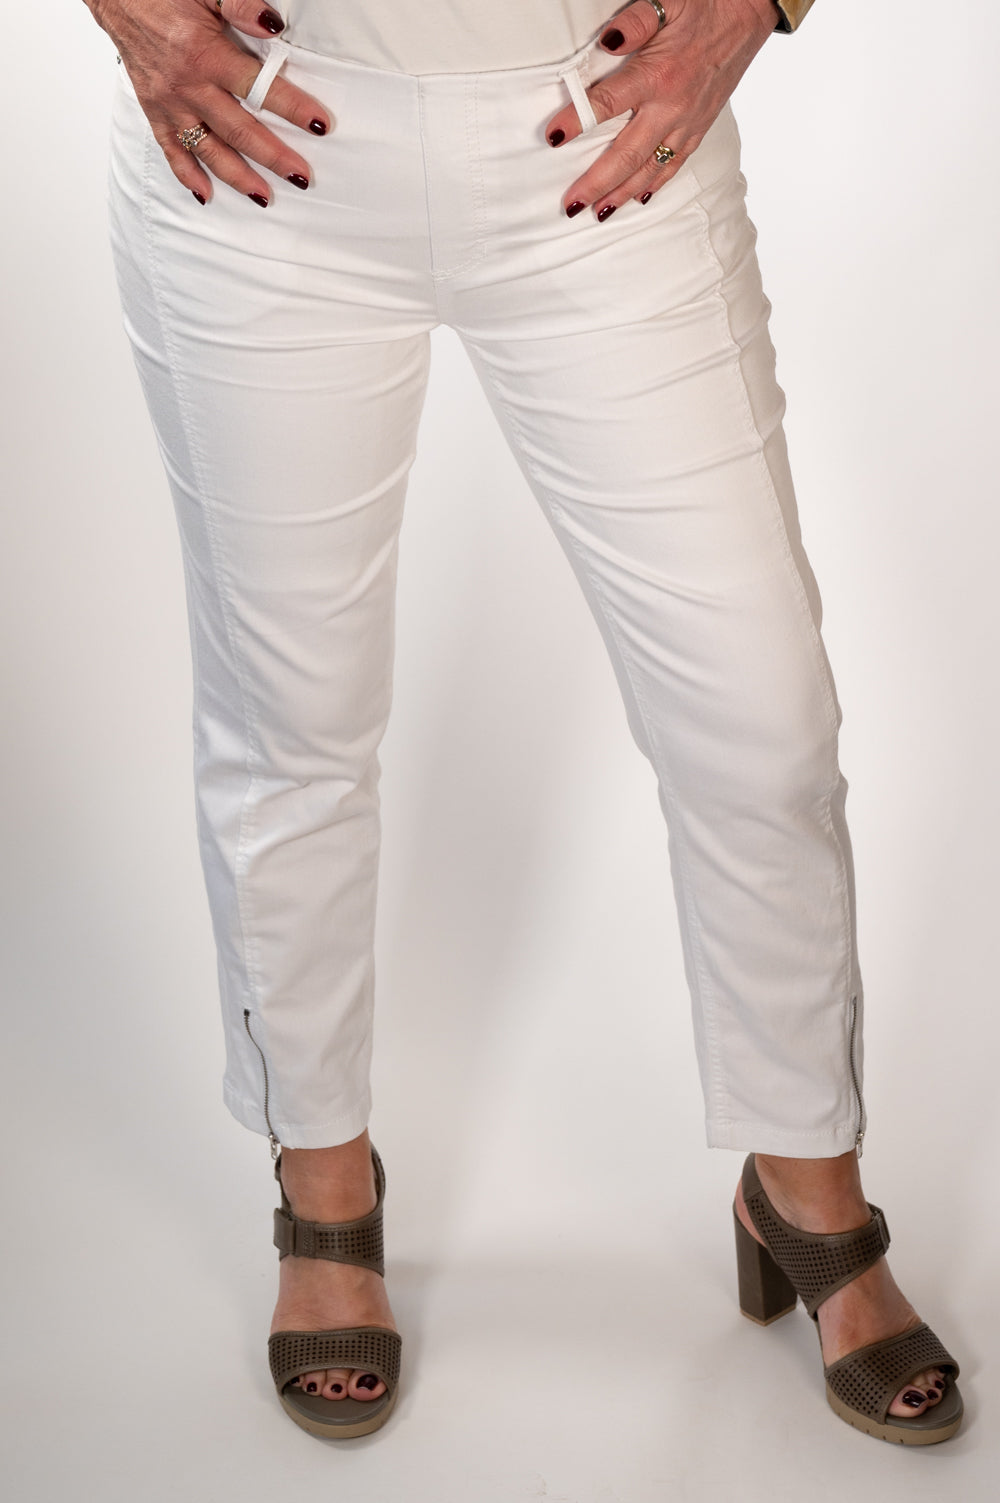 Anna Montana Zip Detail Angelika Ankle Grazer Jeans (1339) - White